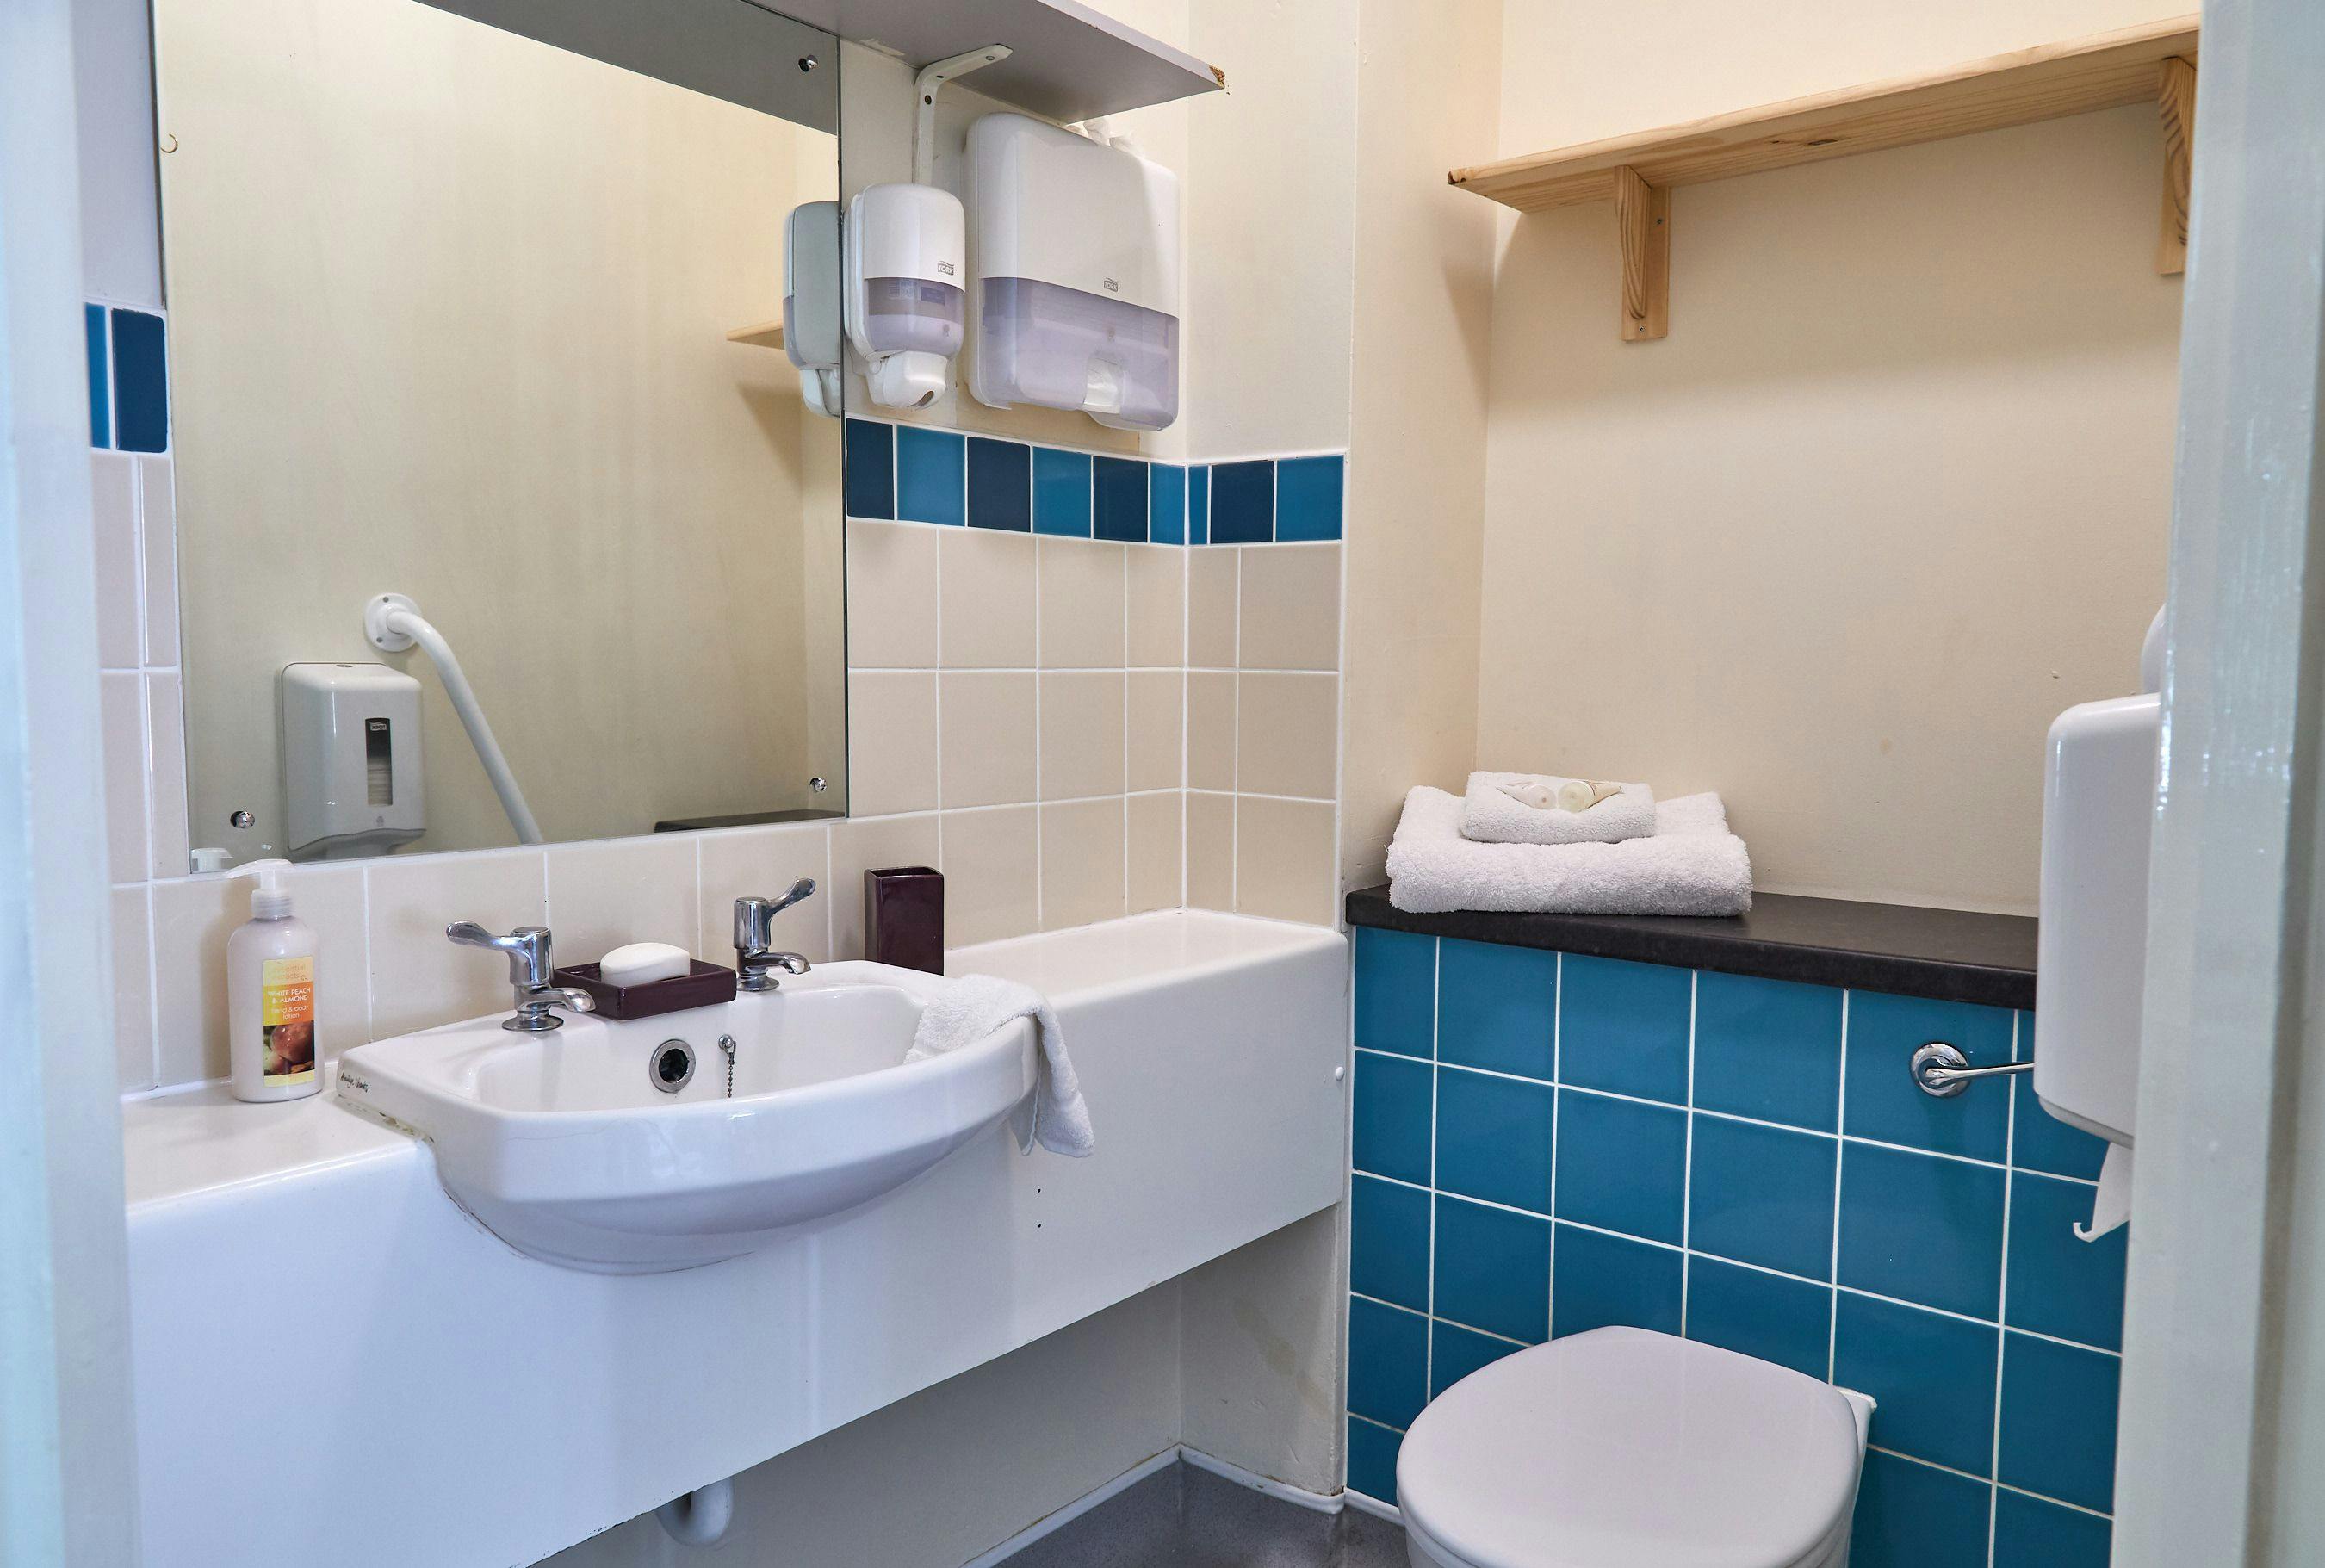 Bathroom of Newlands Care Home in Workington, Cumbria